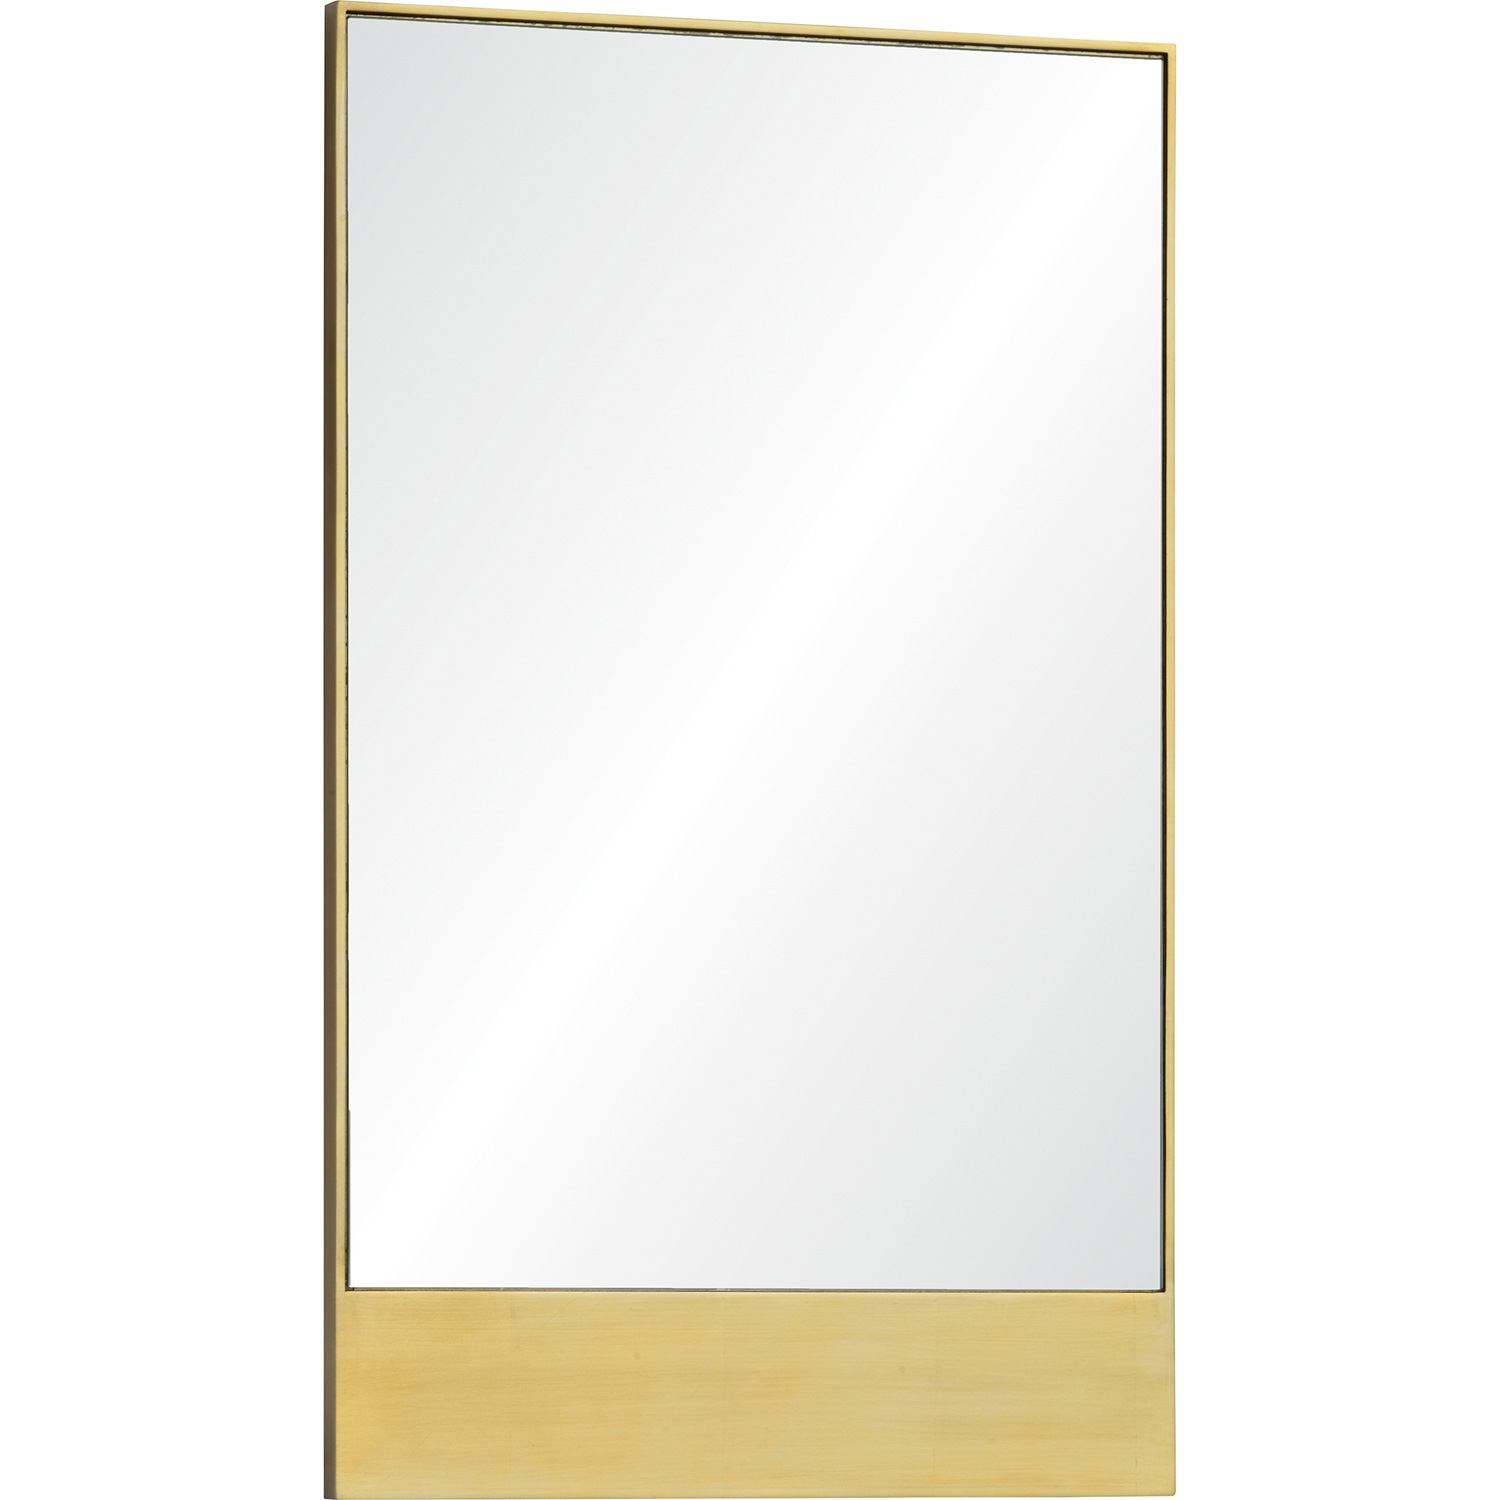 Ren-Wil Sadler Rectangle Mirror - Gold Leaf